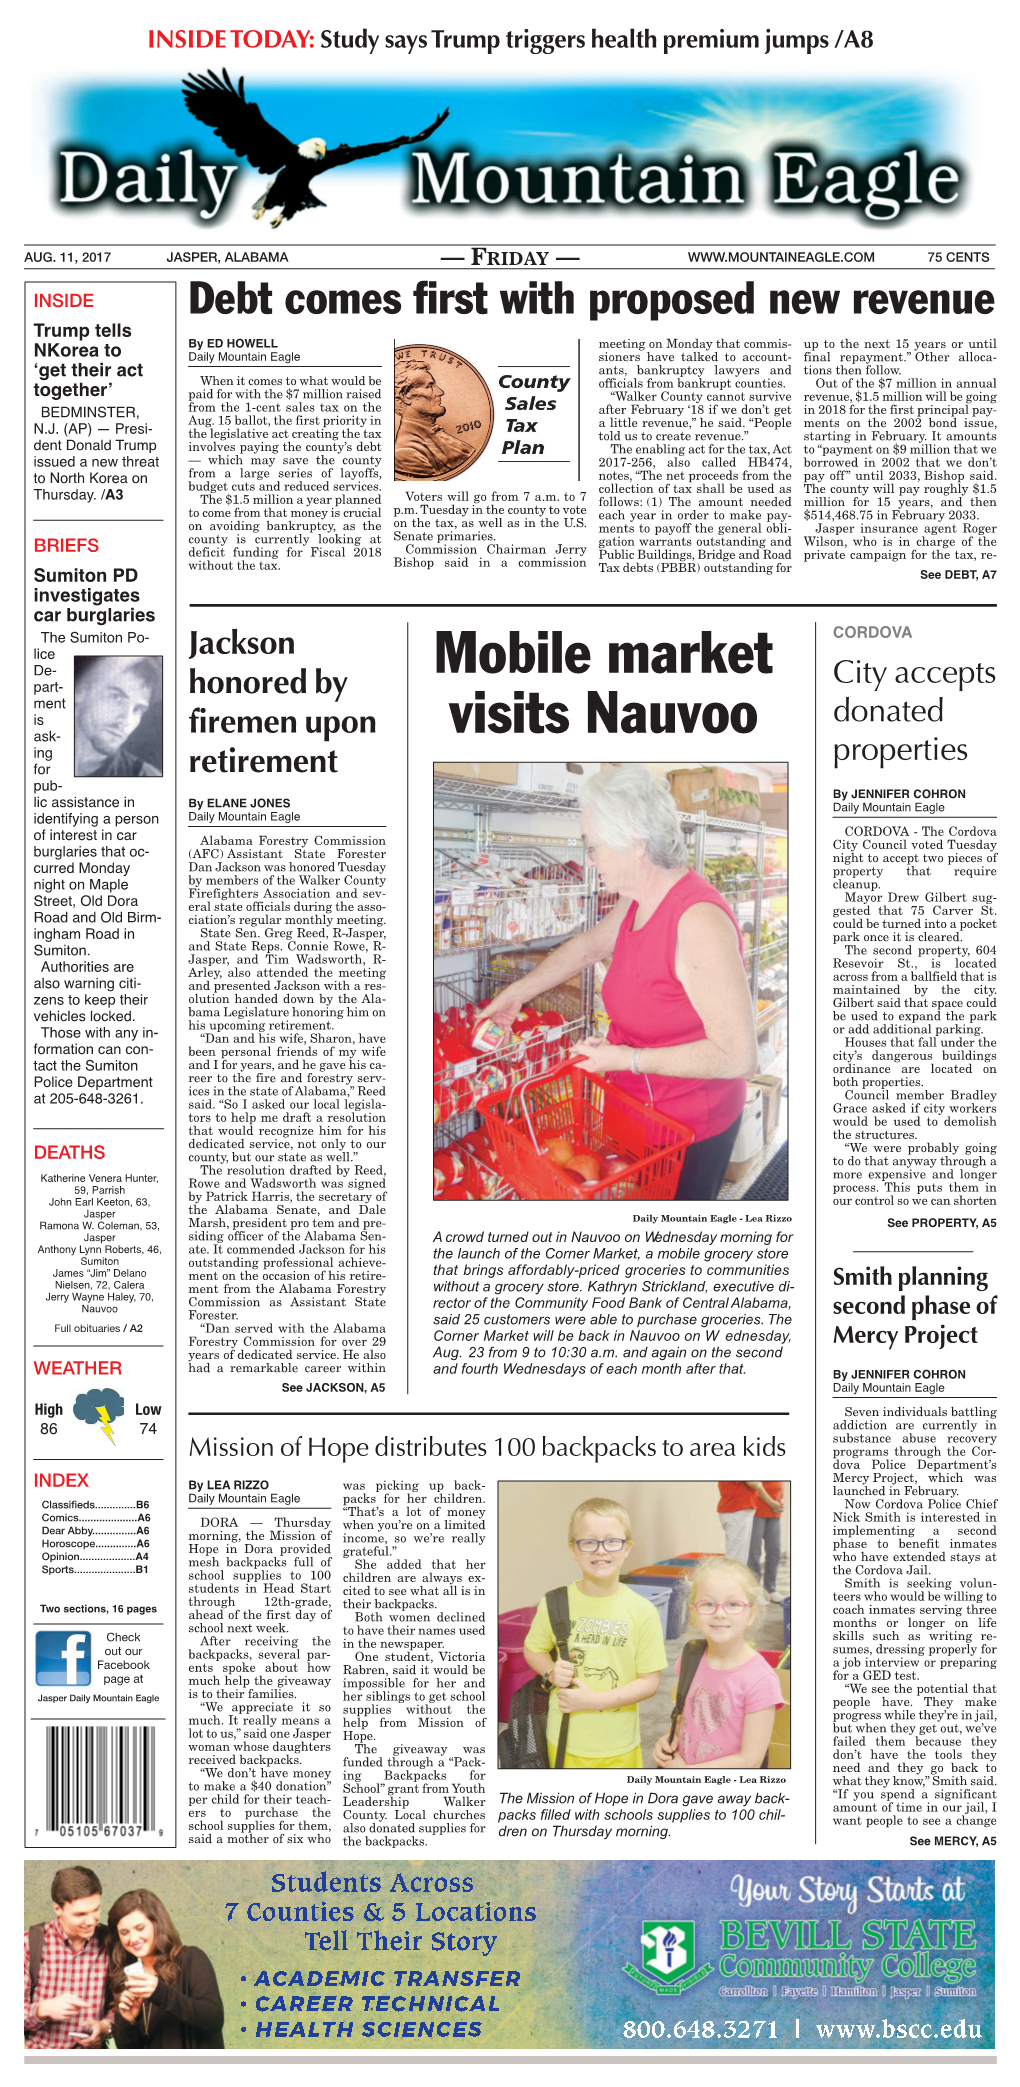 Mobile Market Visits Nauvoo